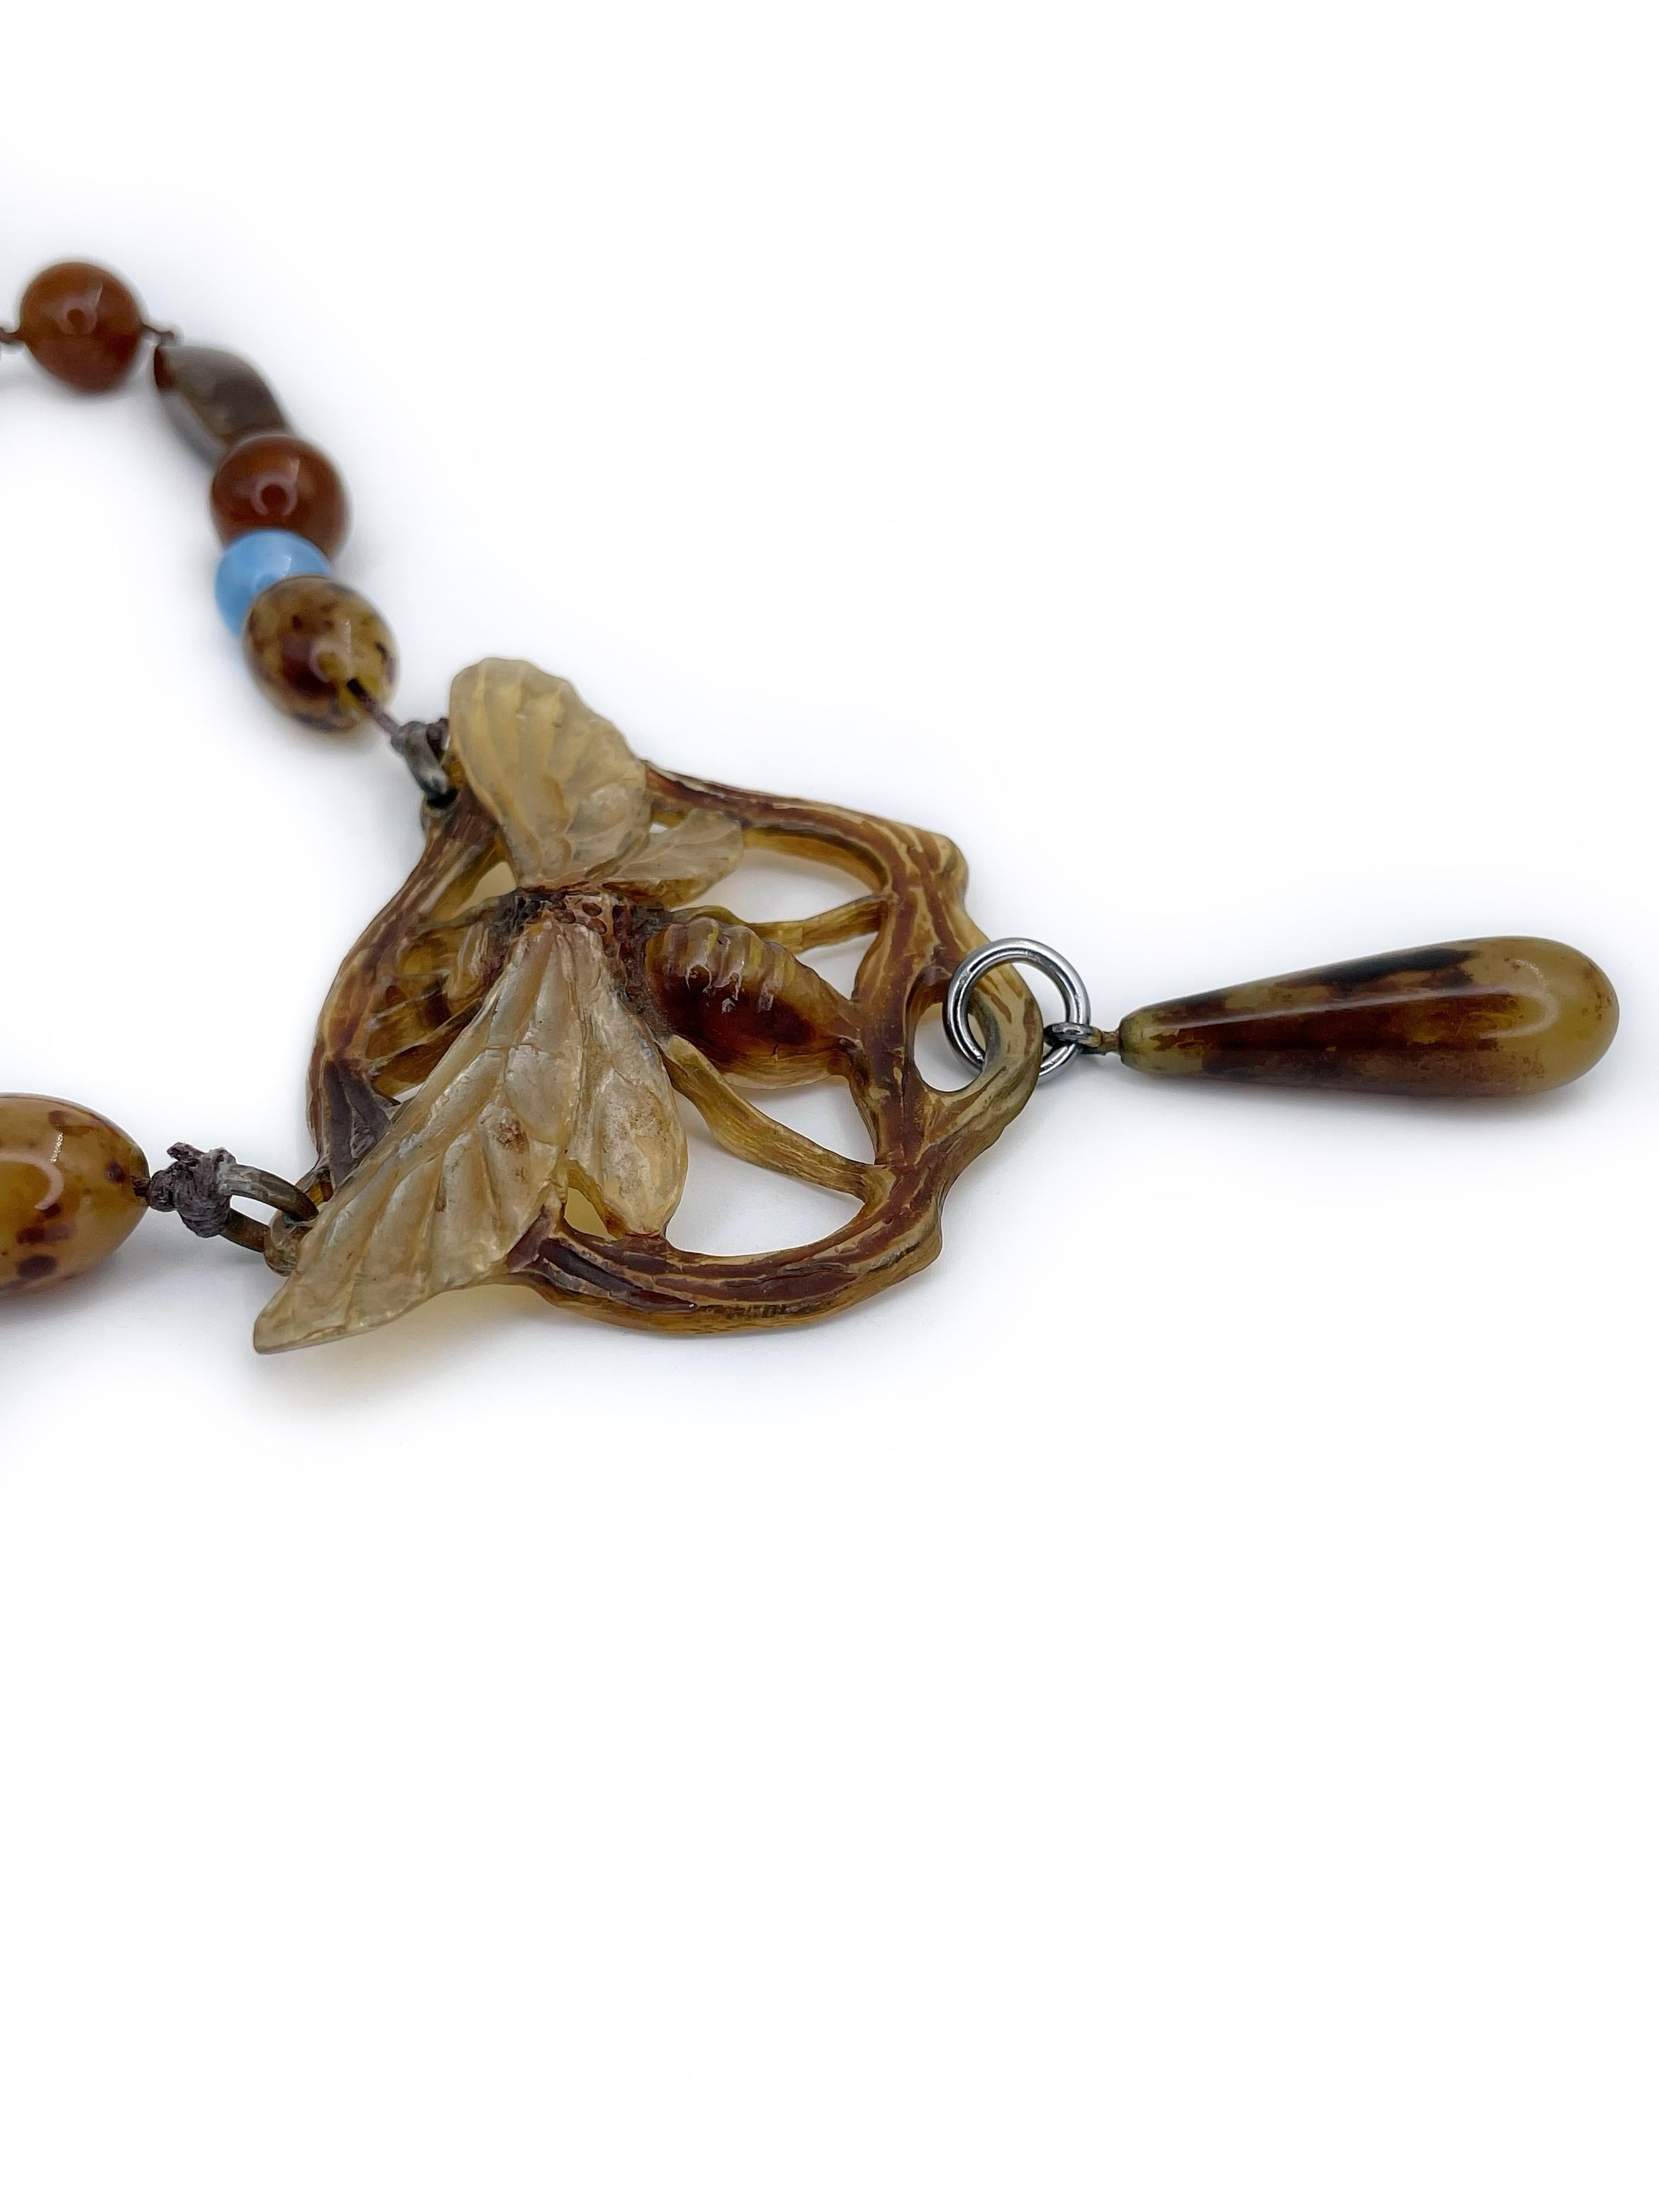 Art Nouveau 1900s Georges Pierre Signed Insect Pendant Bead Necklace For Sale 4